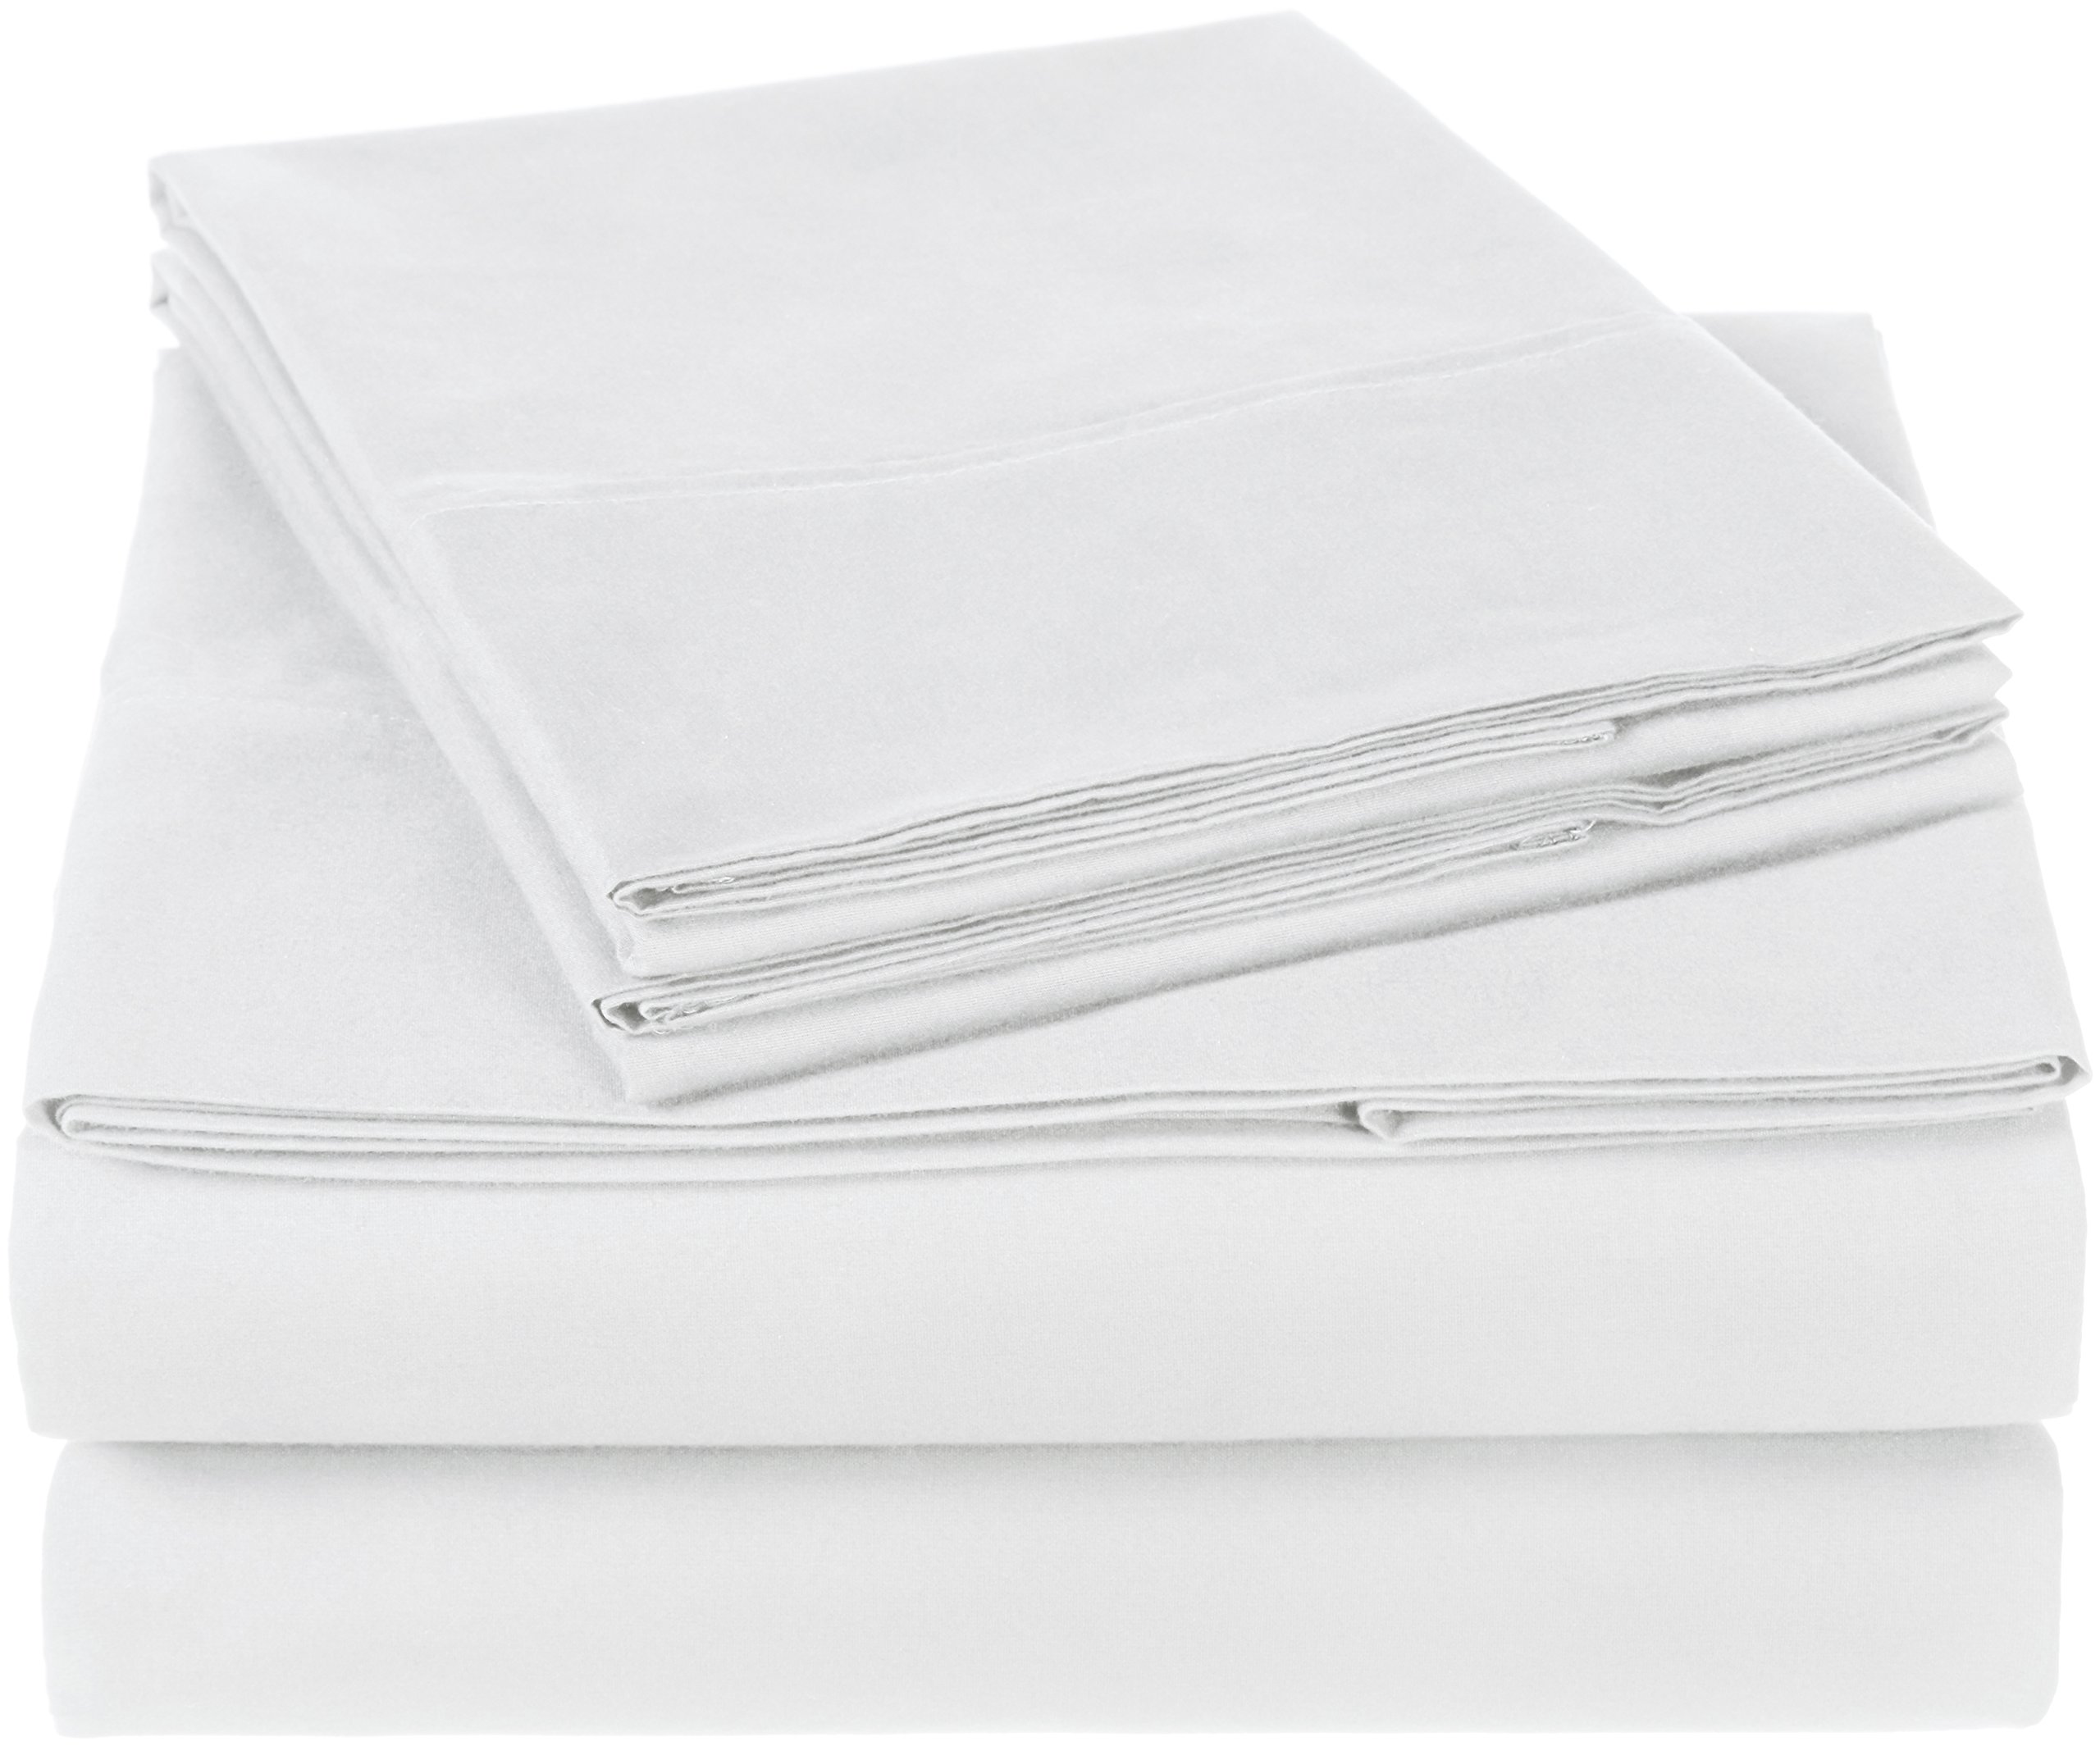 Book Cover Amazon Brand – Pinzon 300 Thread Count Organic Cotton Bed Sheet Set - Queen, White White Queen